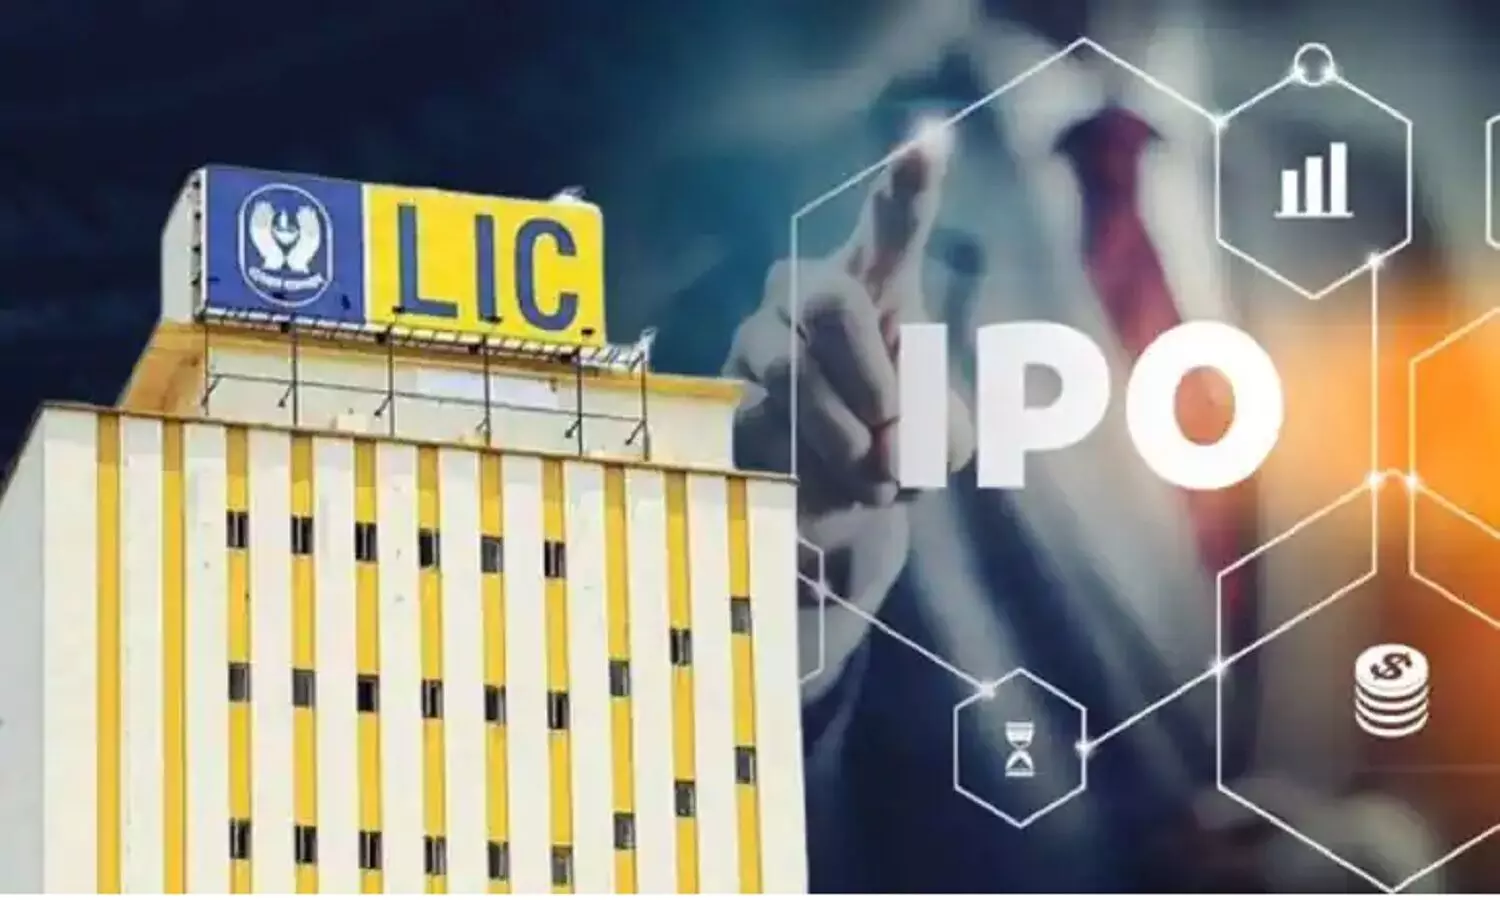 LIC IPO latest news updates